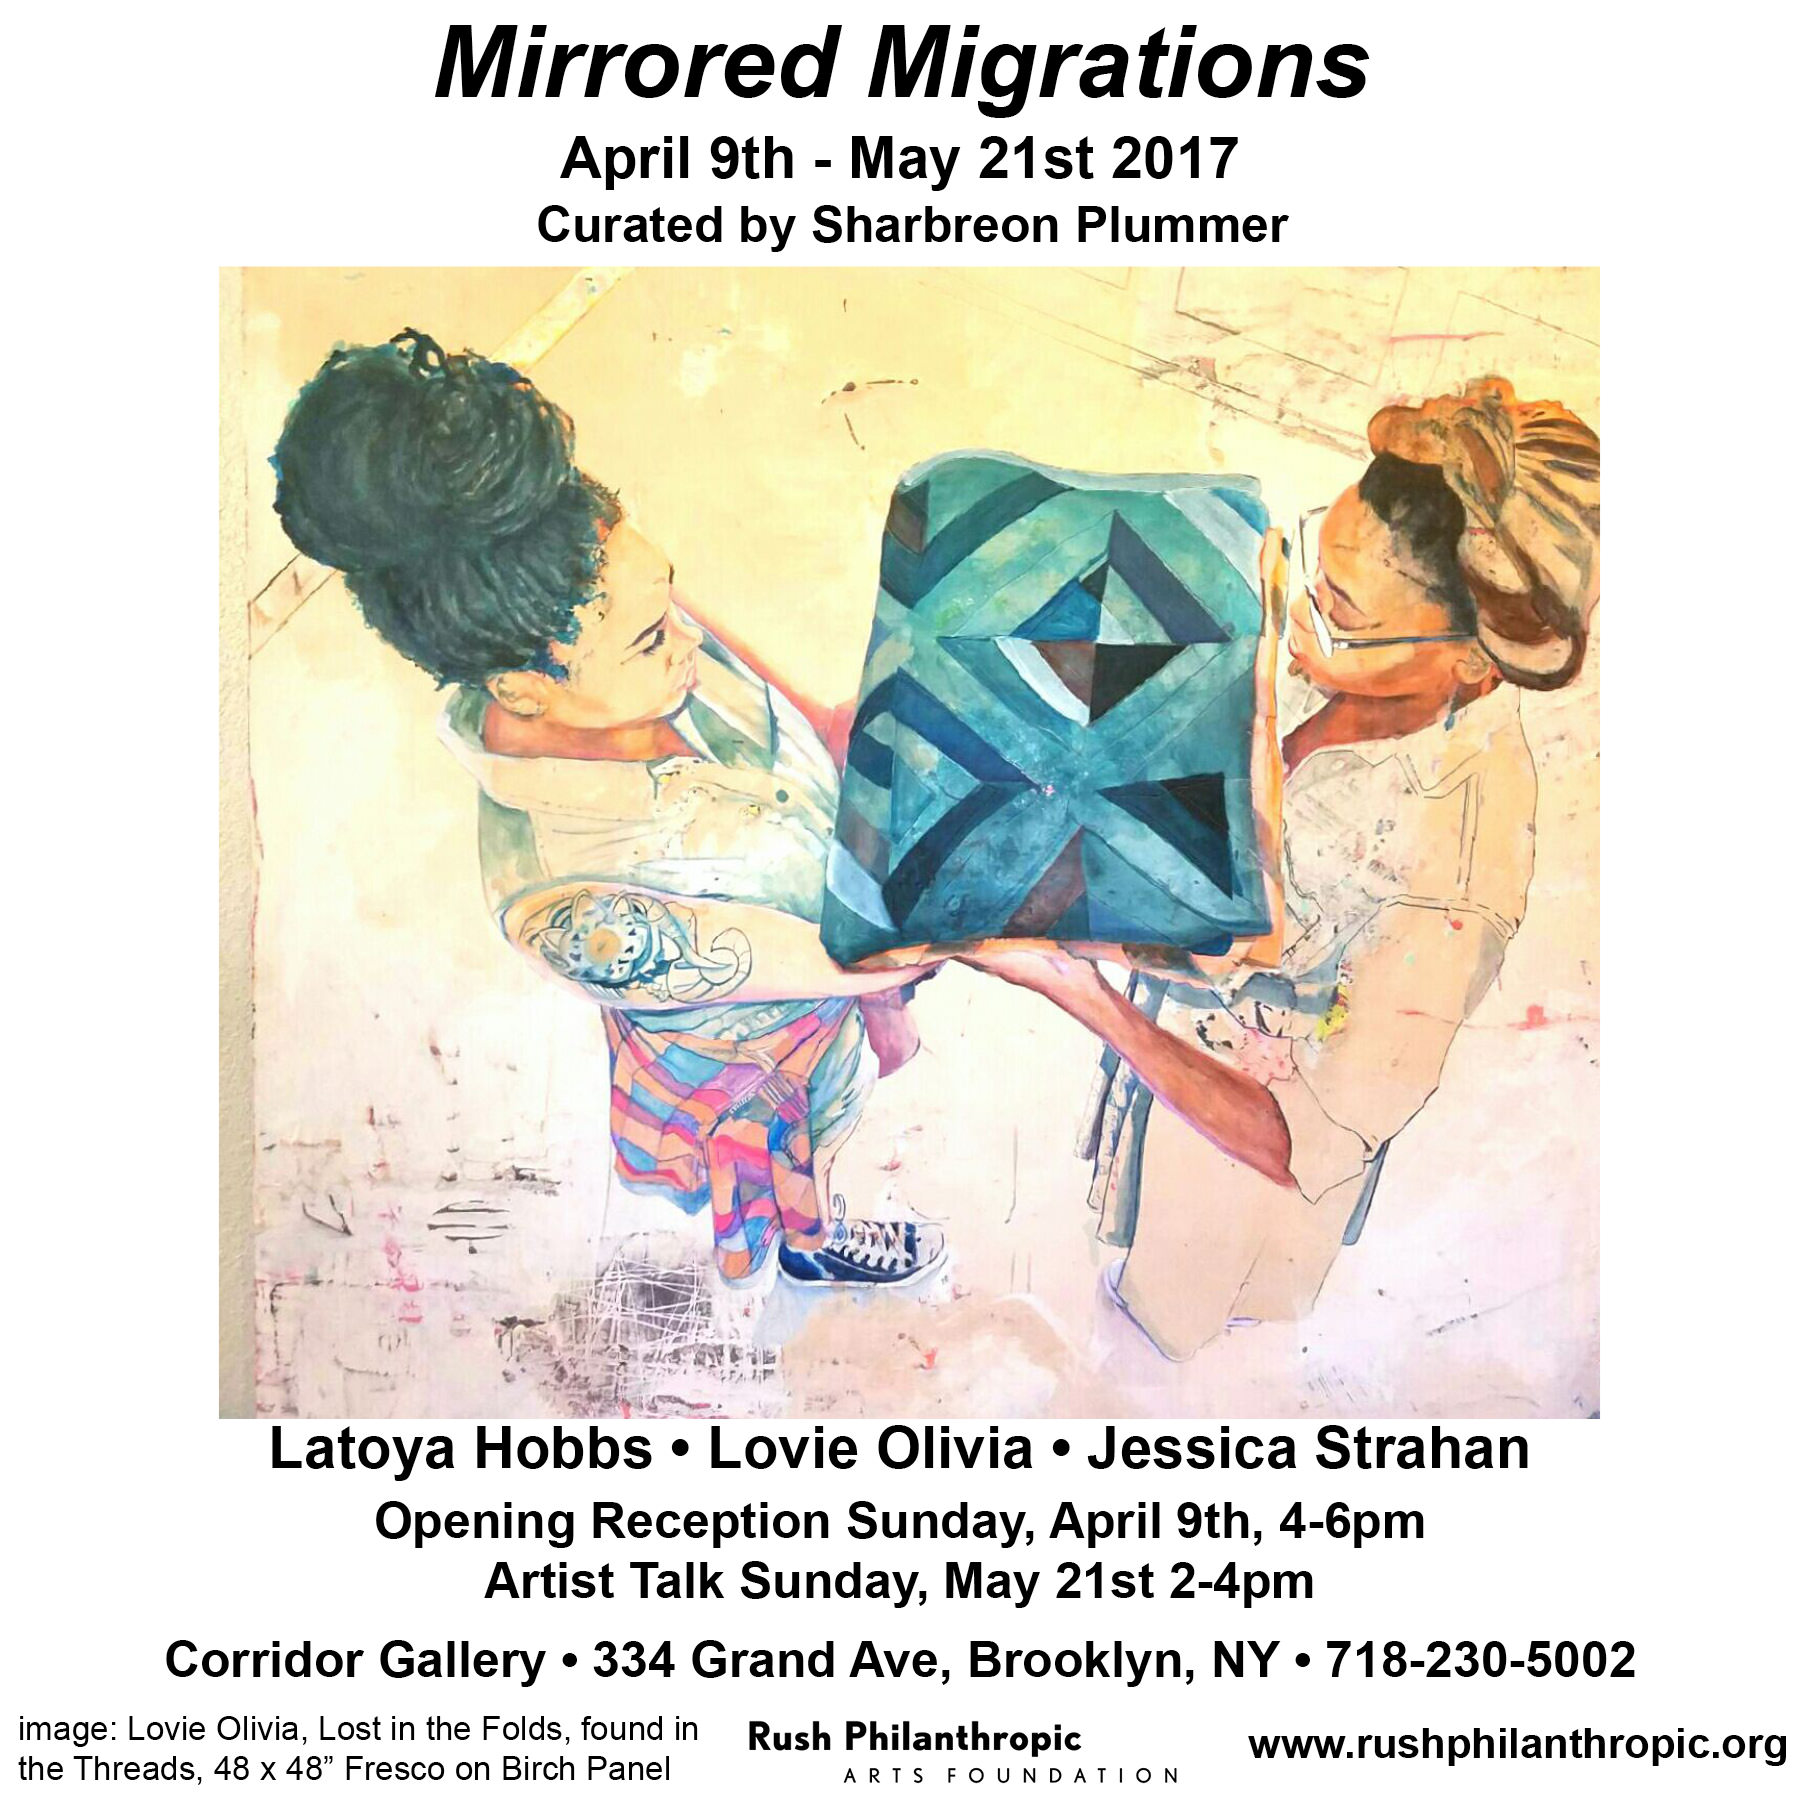 Mirrored Migration